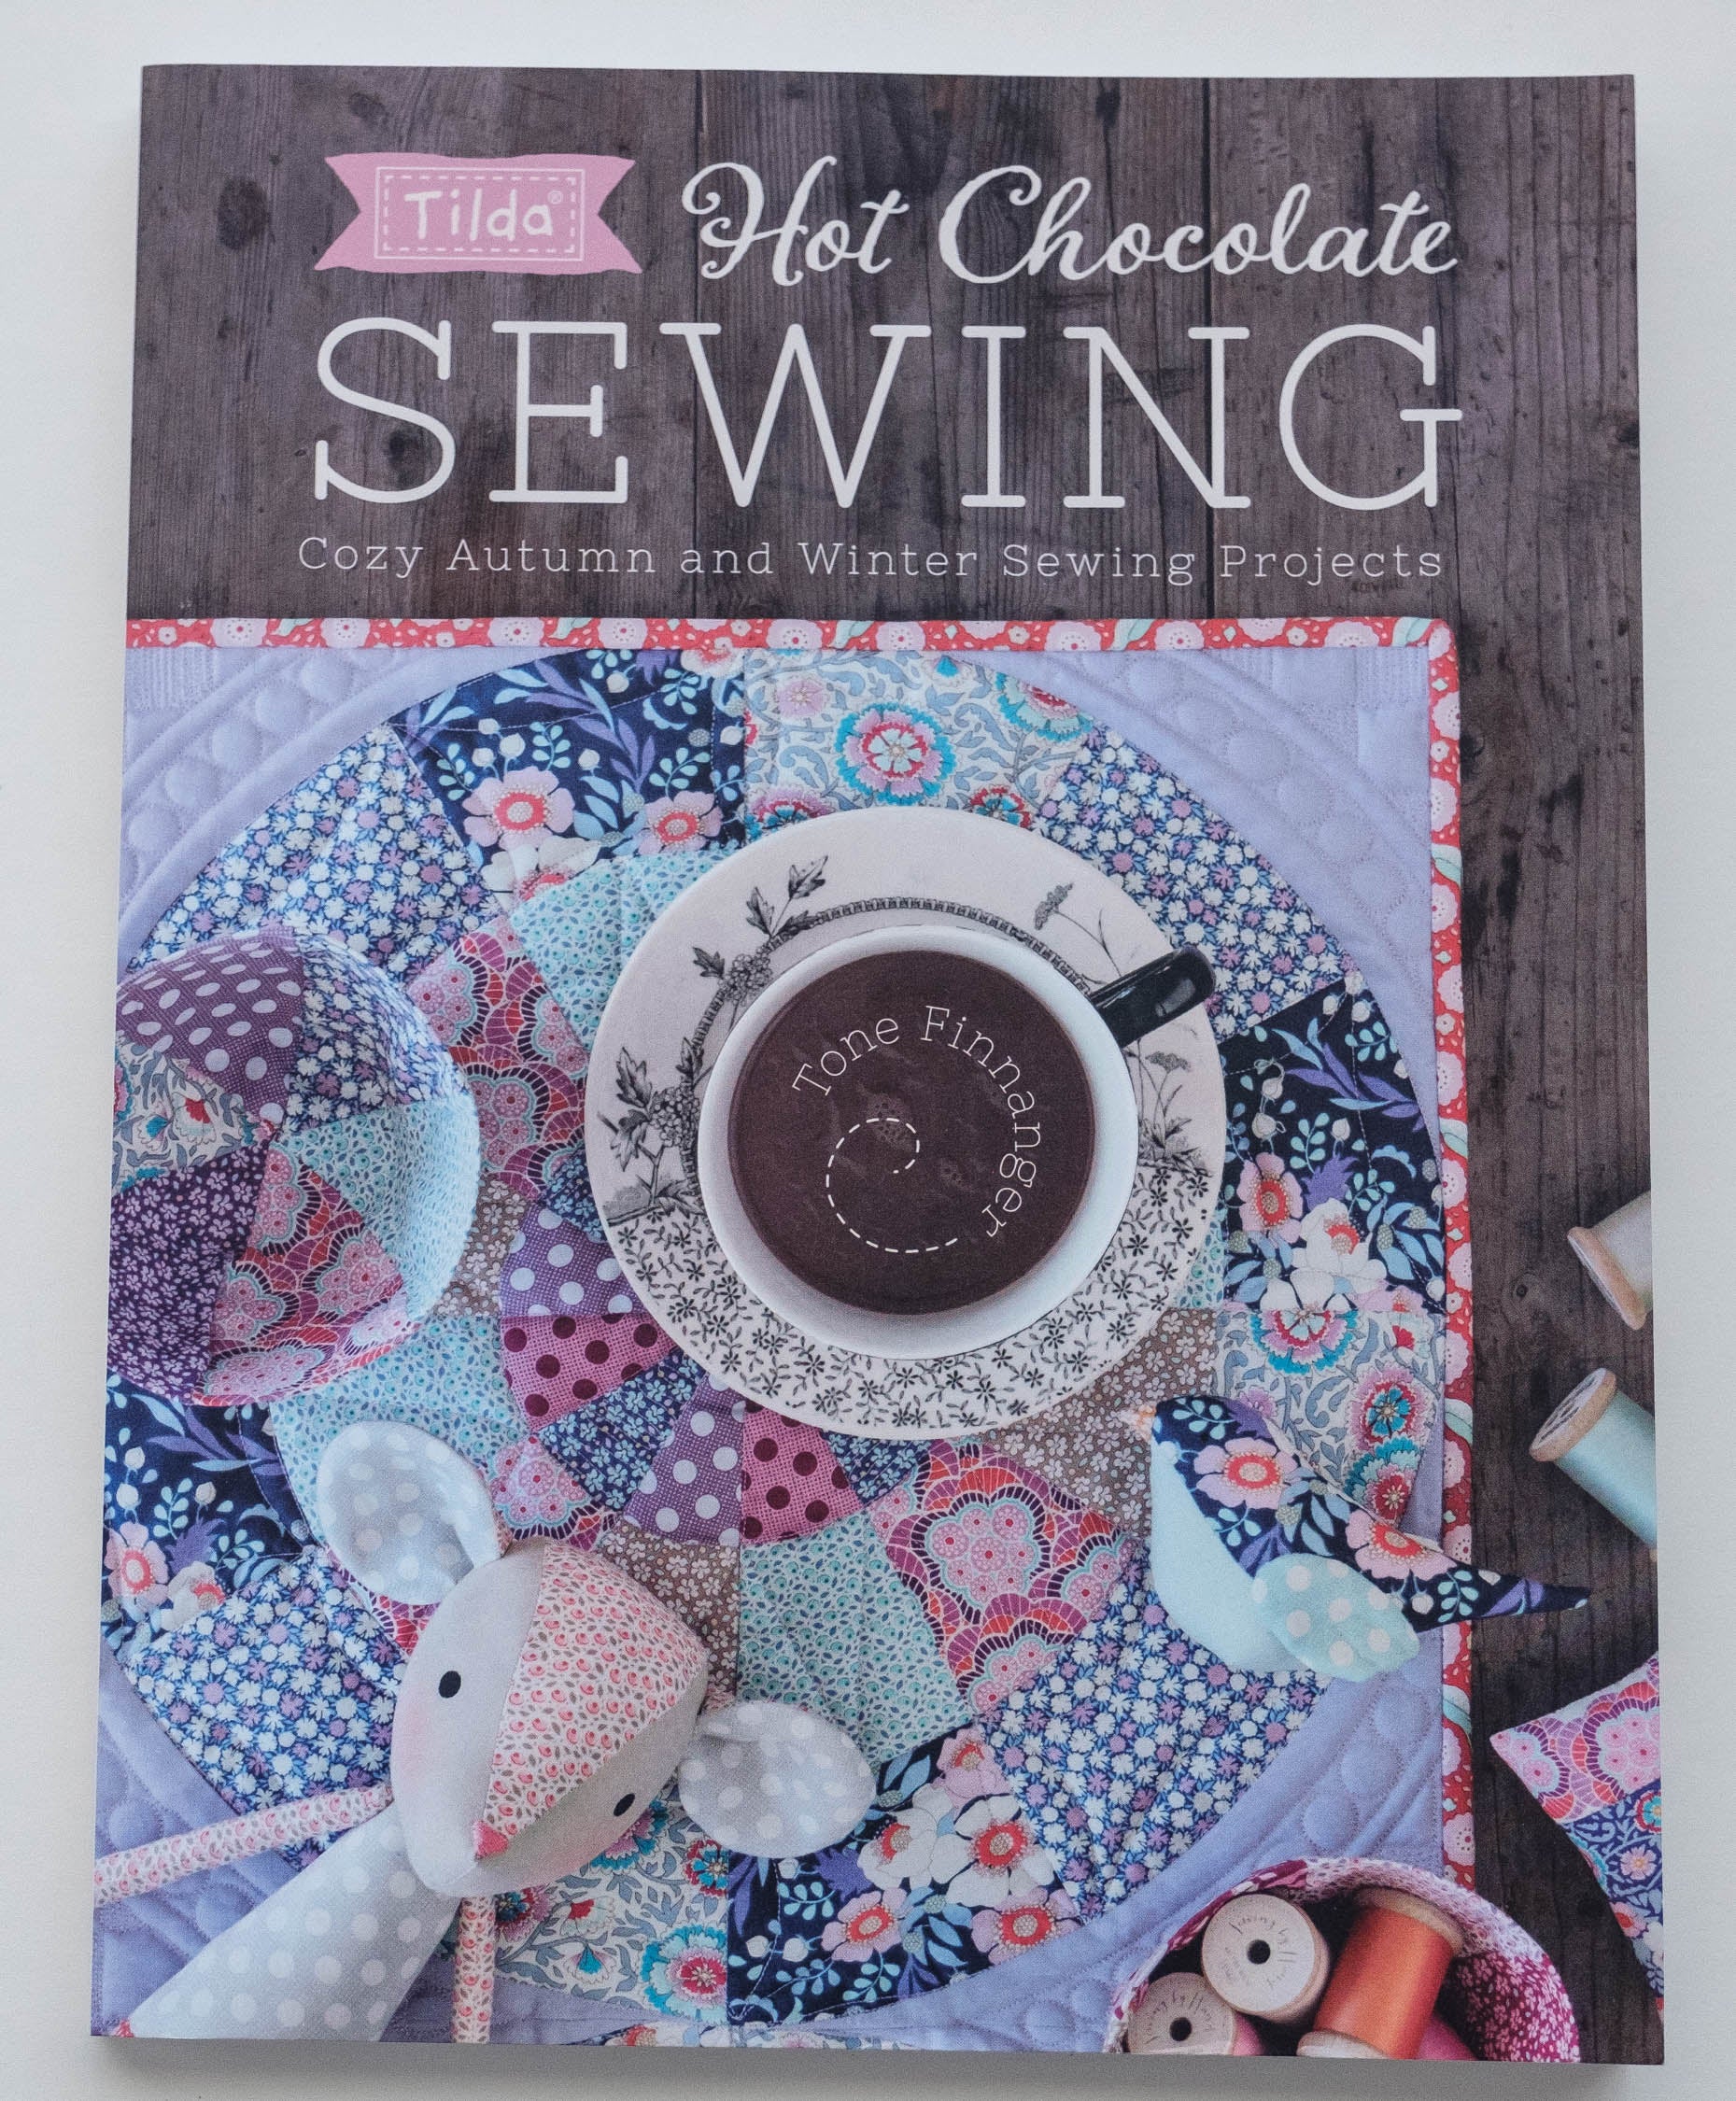 Tilda Hot Chocolate Sewing Book by Tone Finnanger R8543 – SoKe